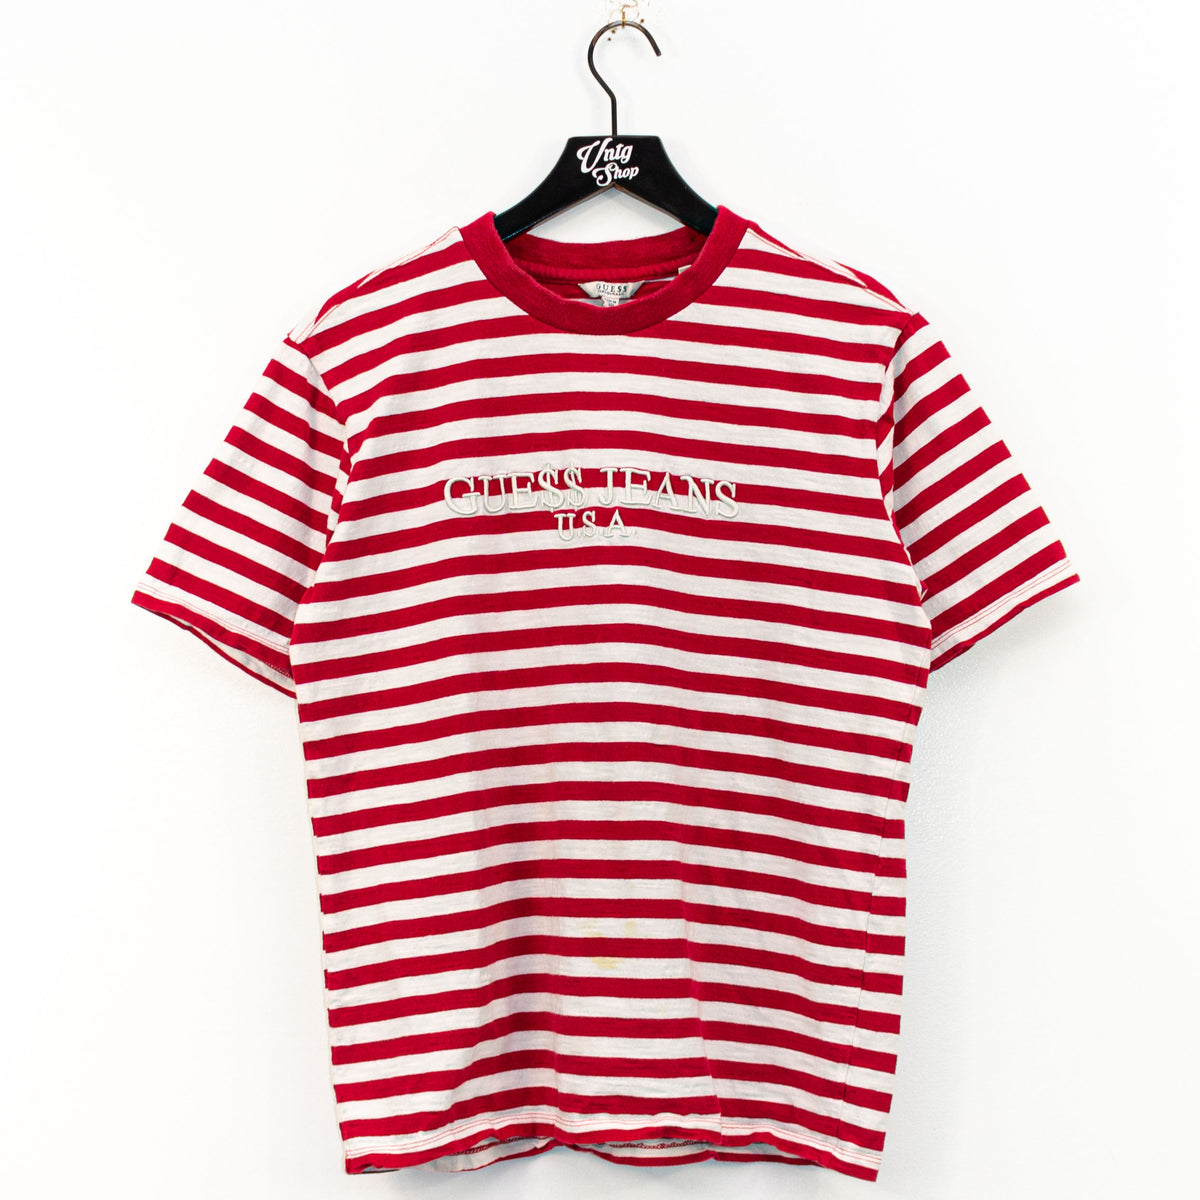 Jeans x ASAP Rocky Striped T-Shirt– VNTG Shop